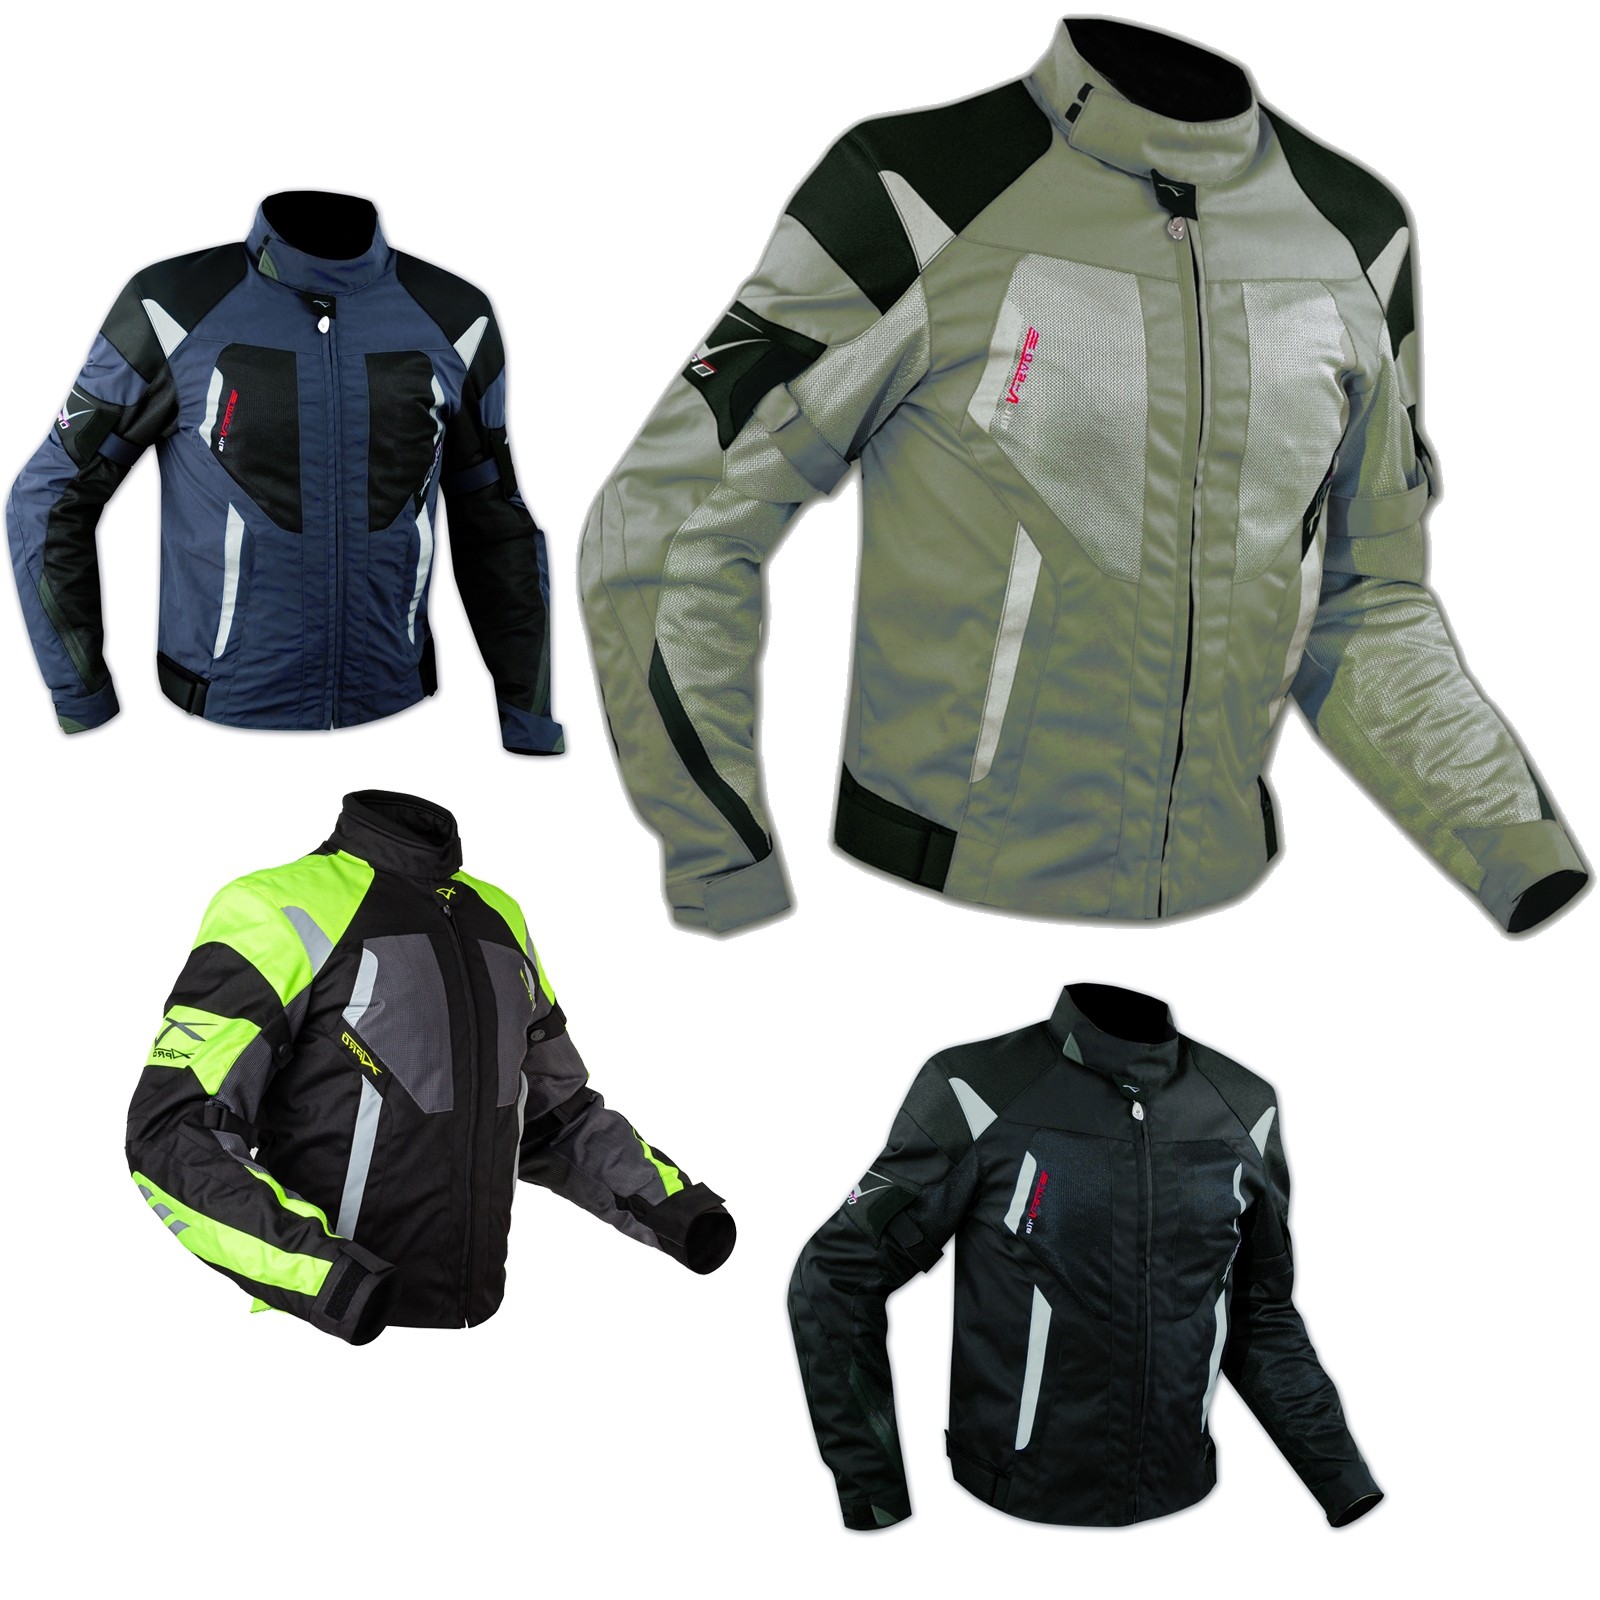 Abbigliamento Moto e Accessori - Giacca Moto Tessuto Cordura Mesh